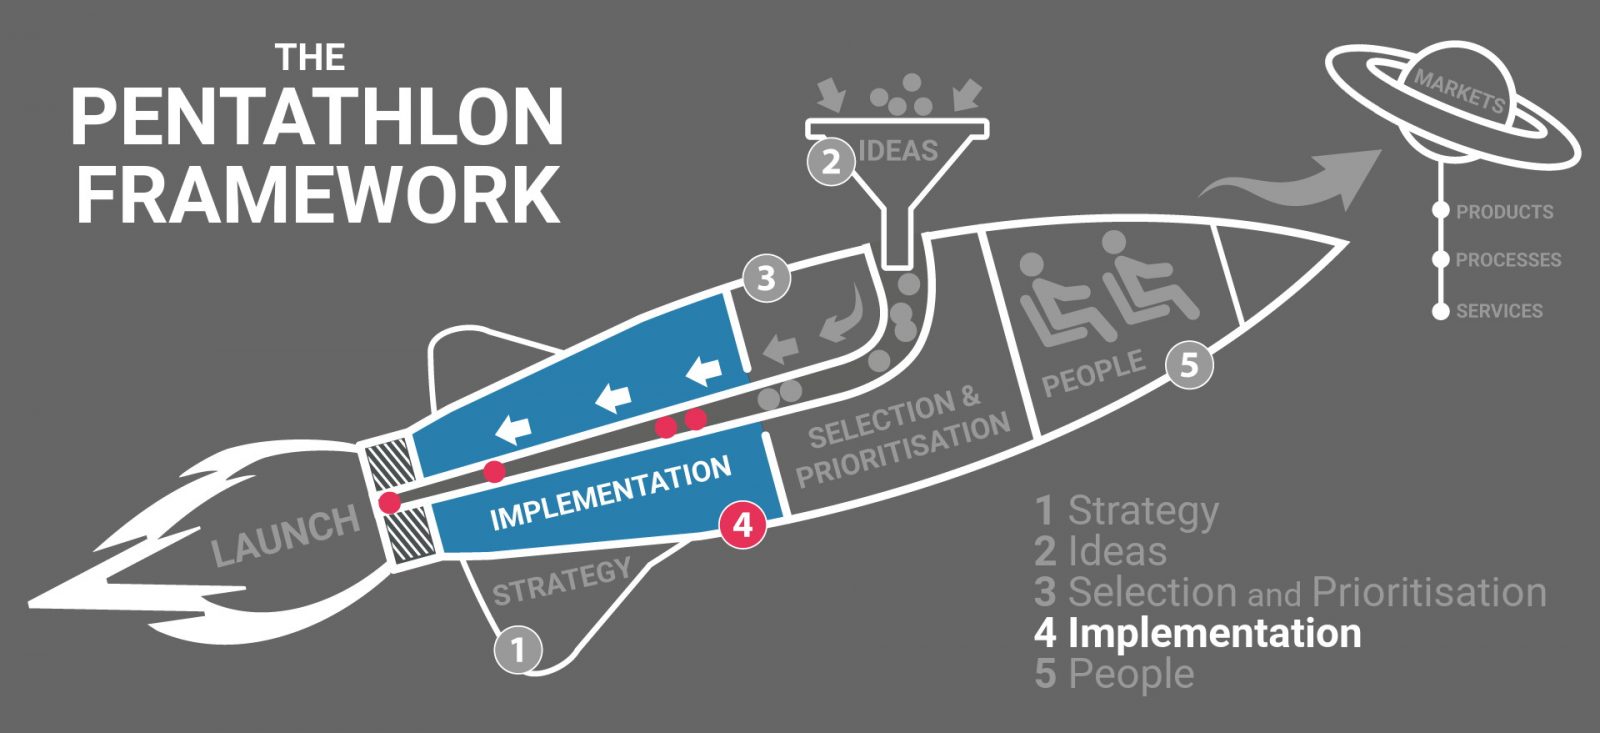 The Pentathlon Framework